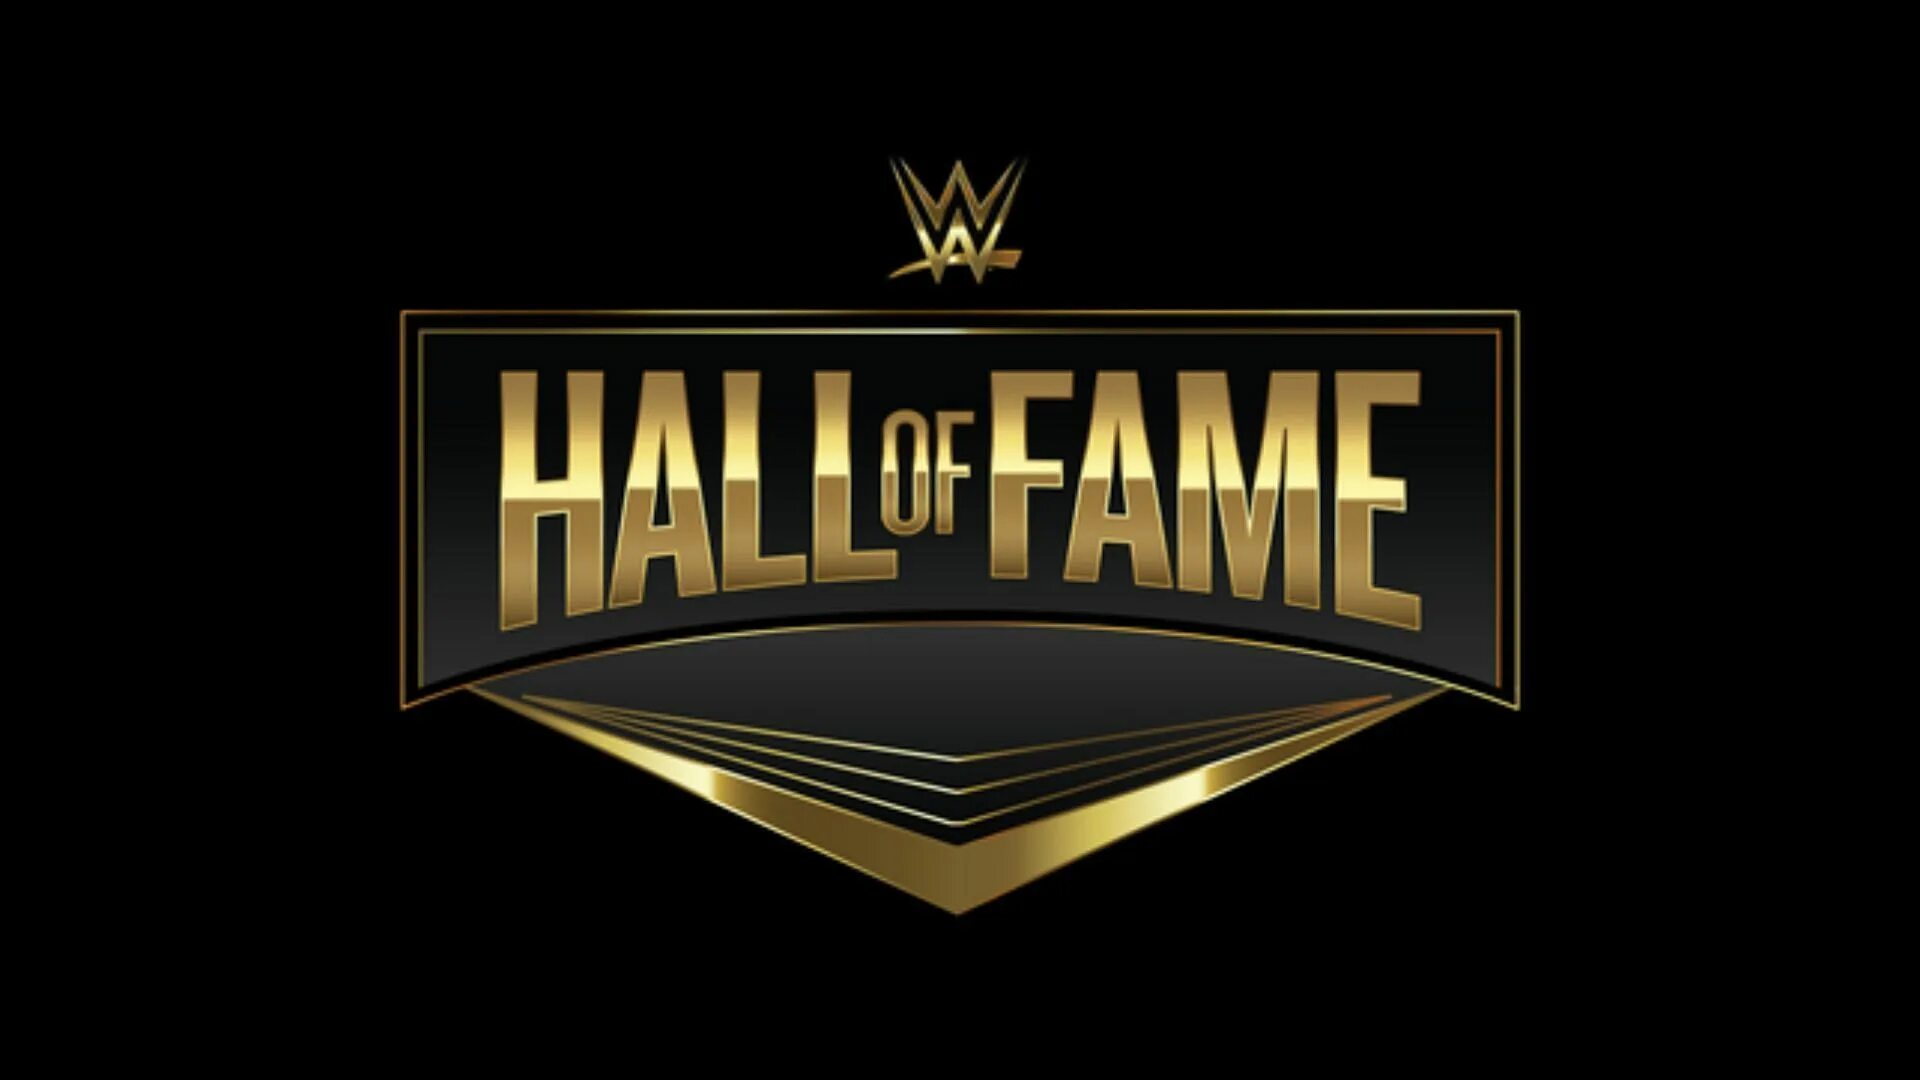 Зал славы ВВЕ. Зал славы WWE. WWE Hall of Fame 2018. Hall of Fame 2020.